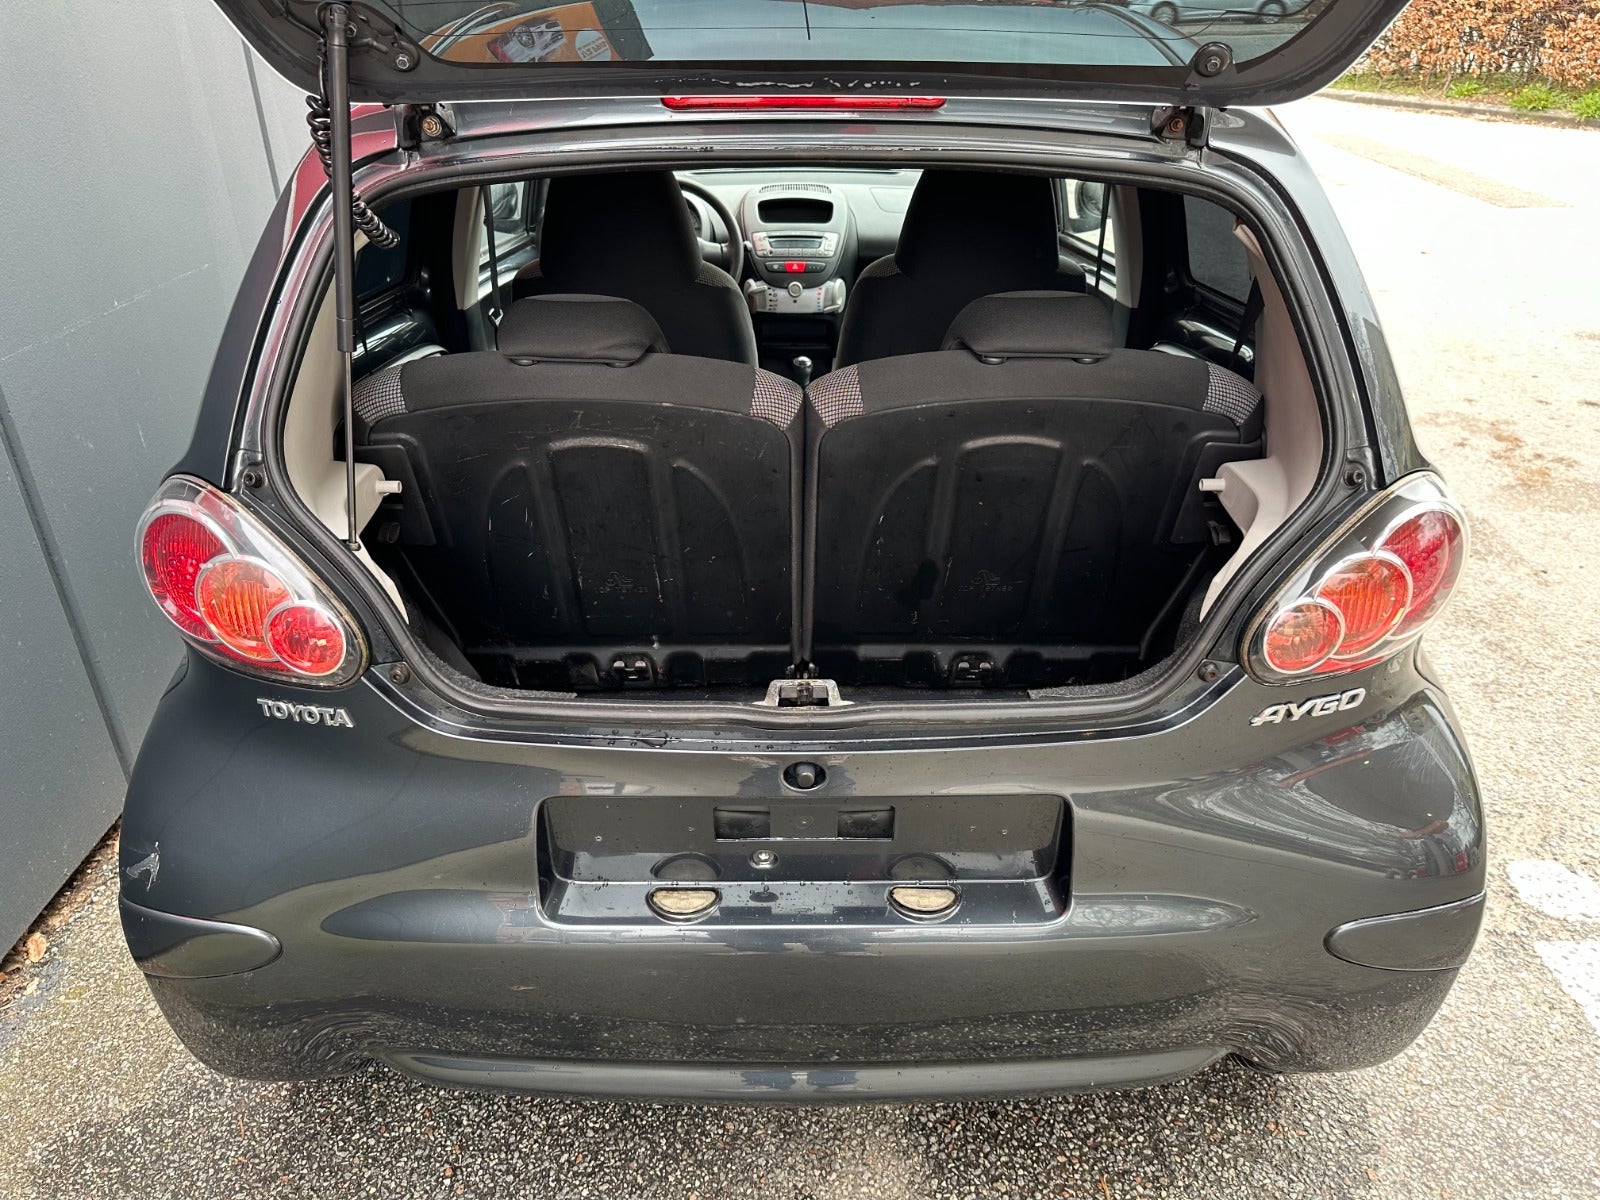 Toyota Aygo 1,0 Benzin modelår 2012 km 230000 ABS airbag